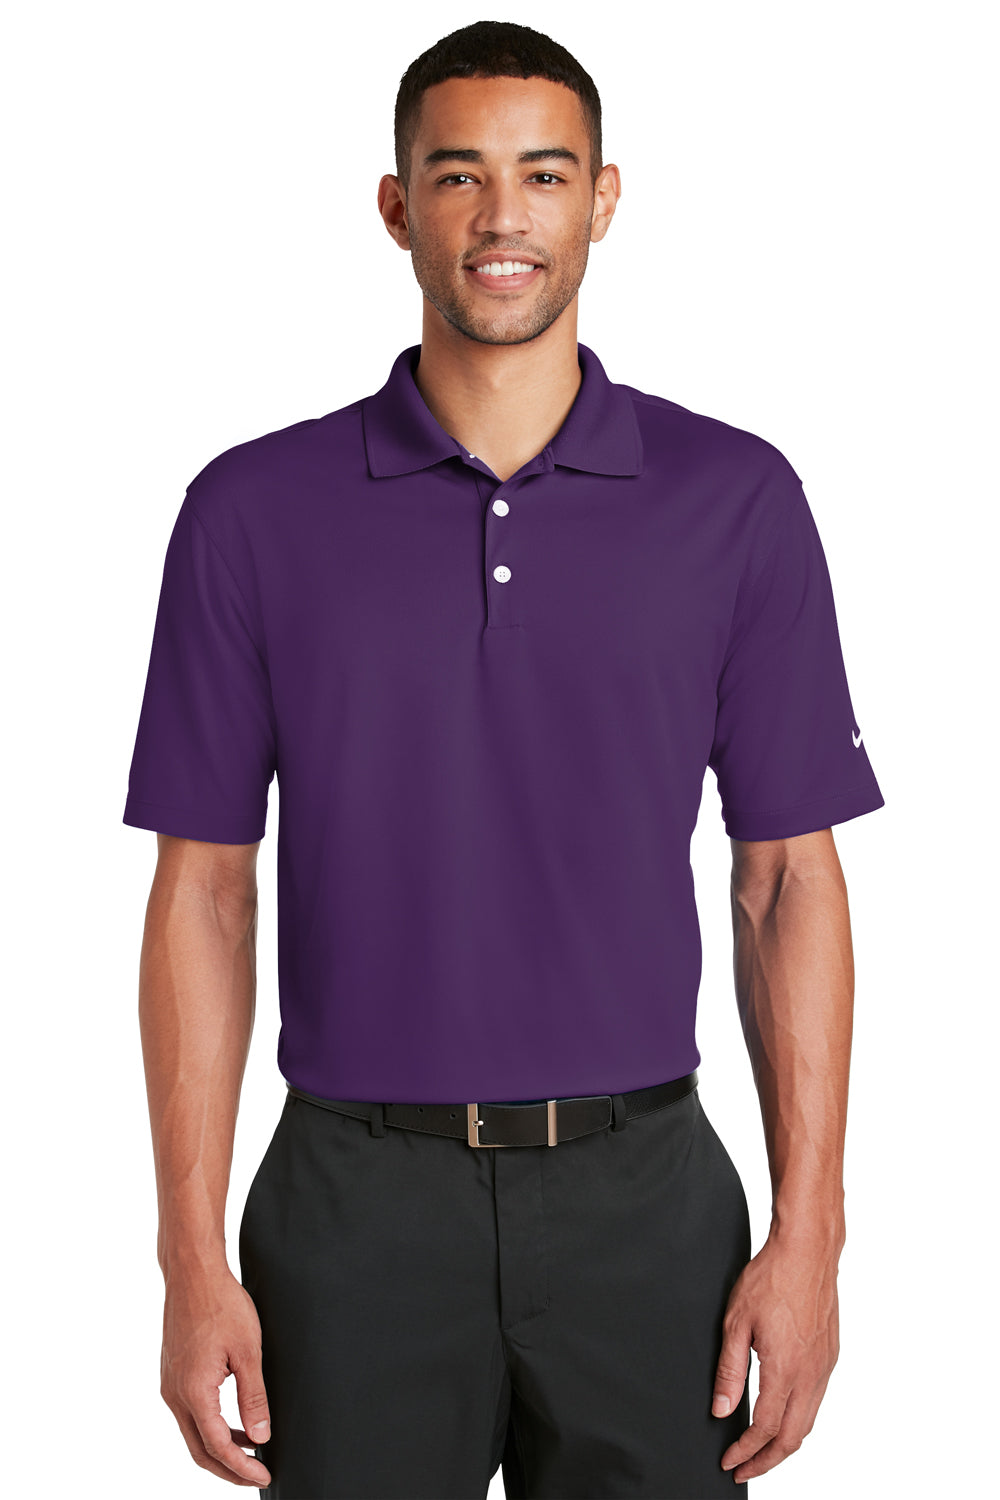 Nike 363807 Mens Dri-Fit Moisture Wicking Short Sleeve Polo Shirt Purple Front